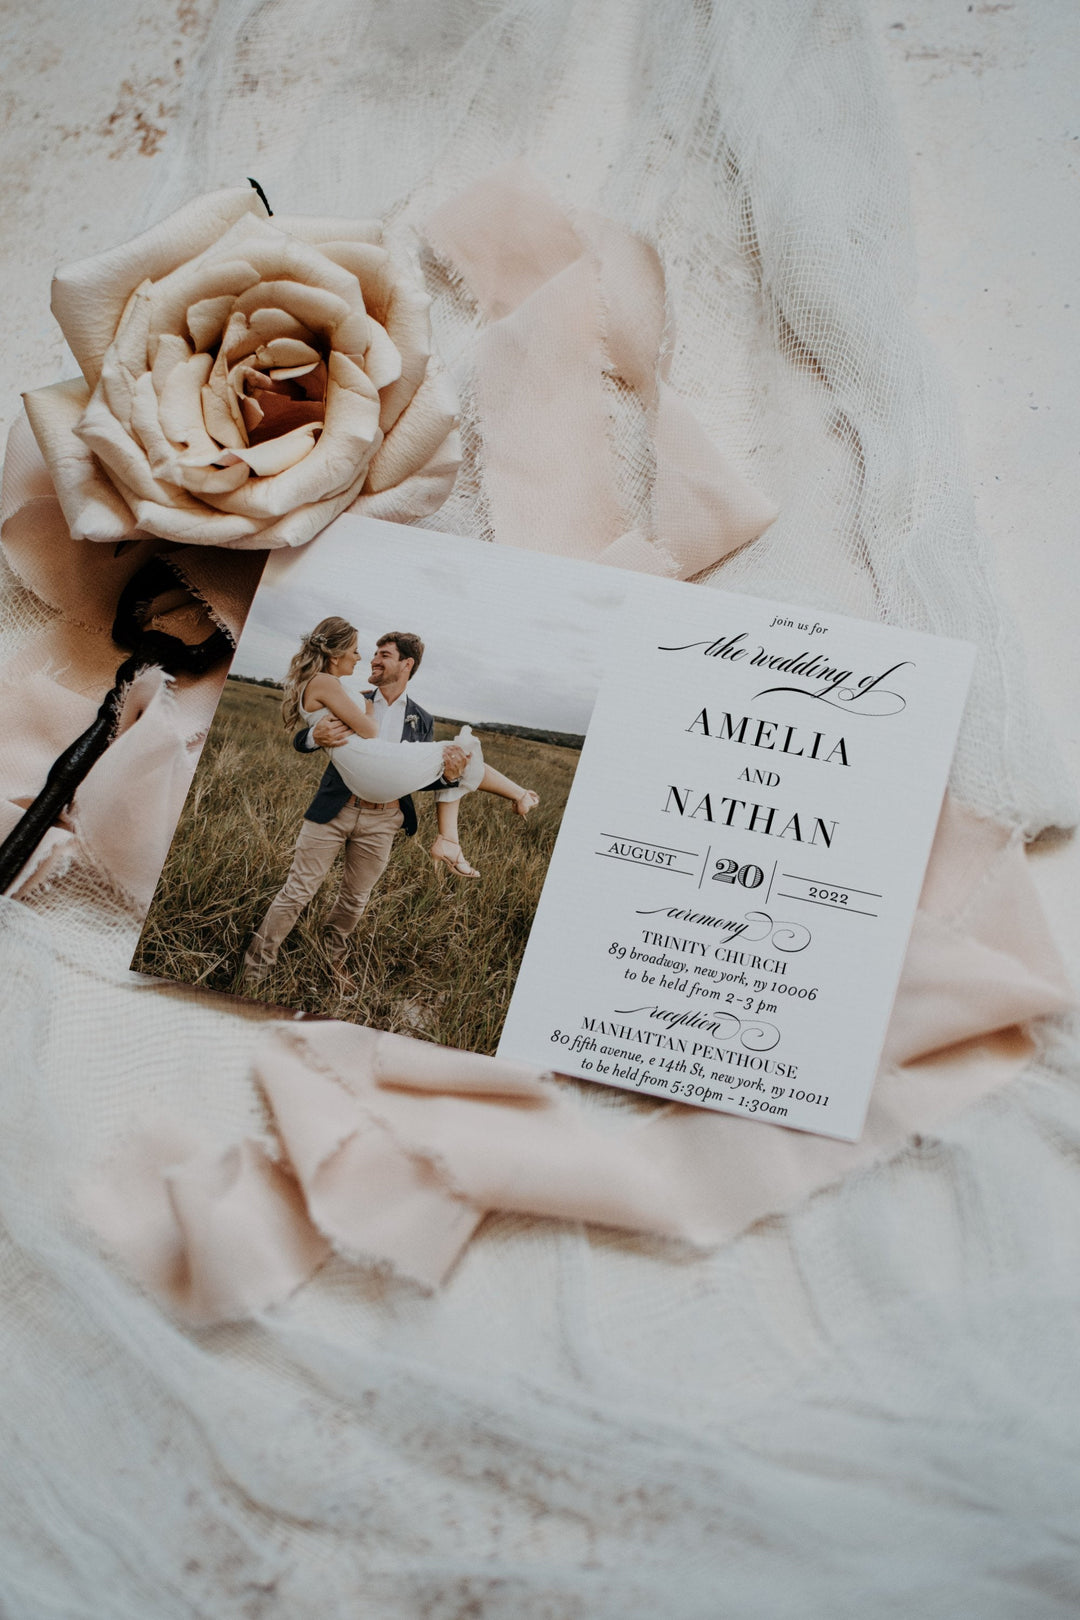 Church Wedding Invitation - Wedding Invitation with Picture - Classic Wedding Invitation - Simple Wedding Invite - Elegant Wedding Invite